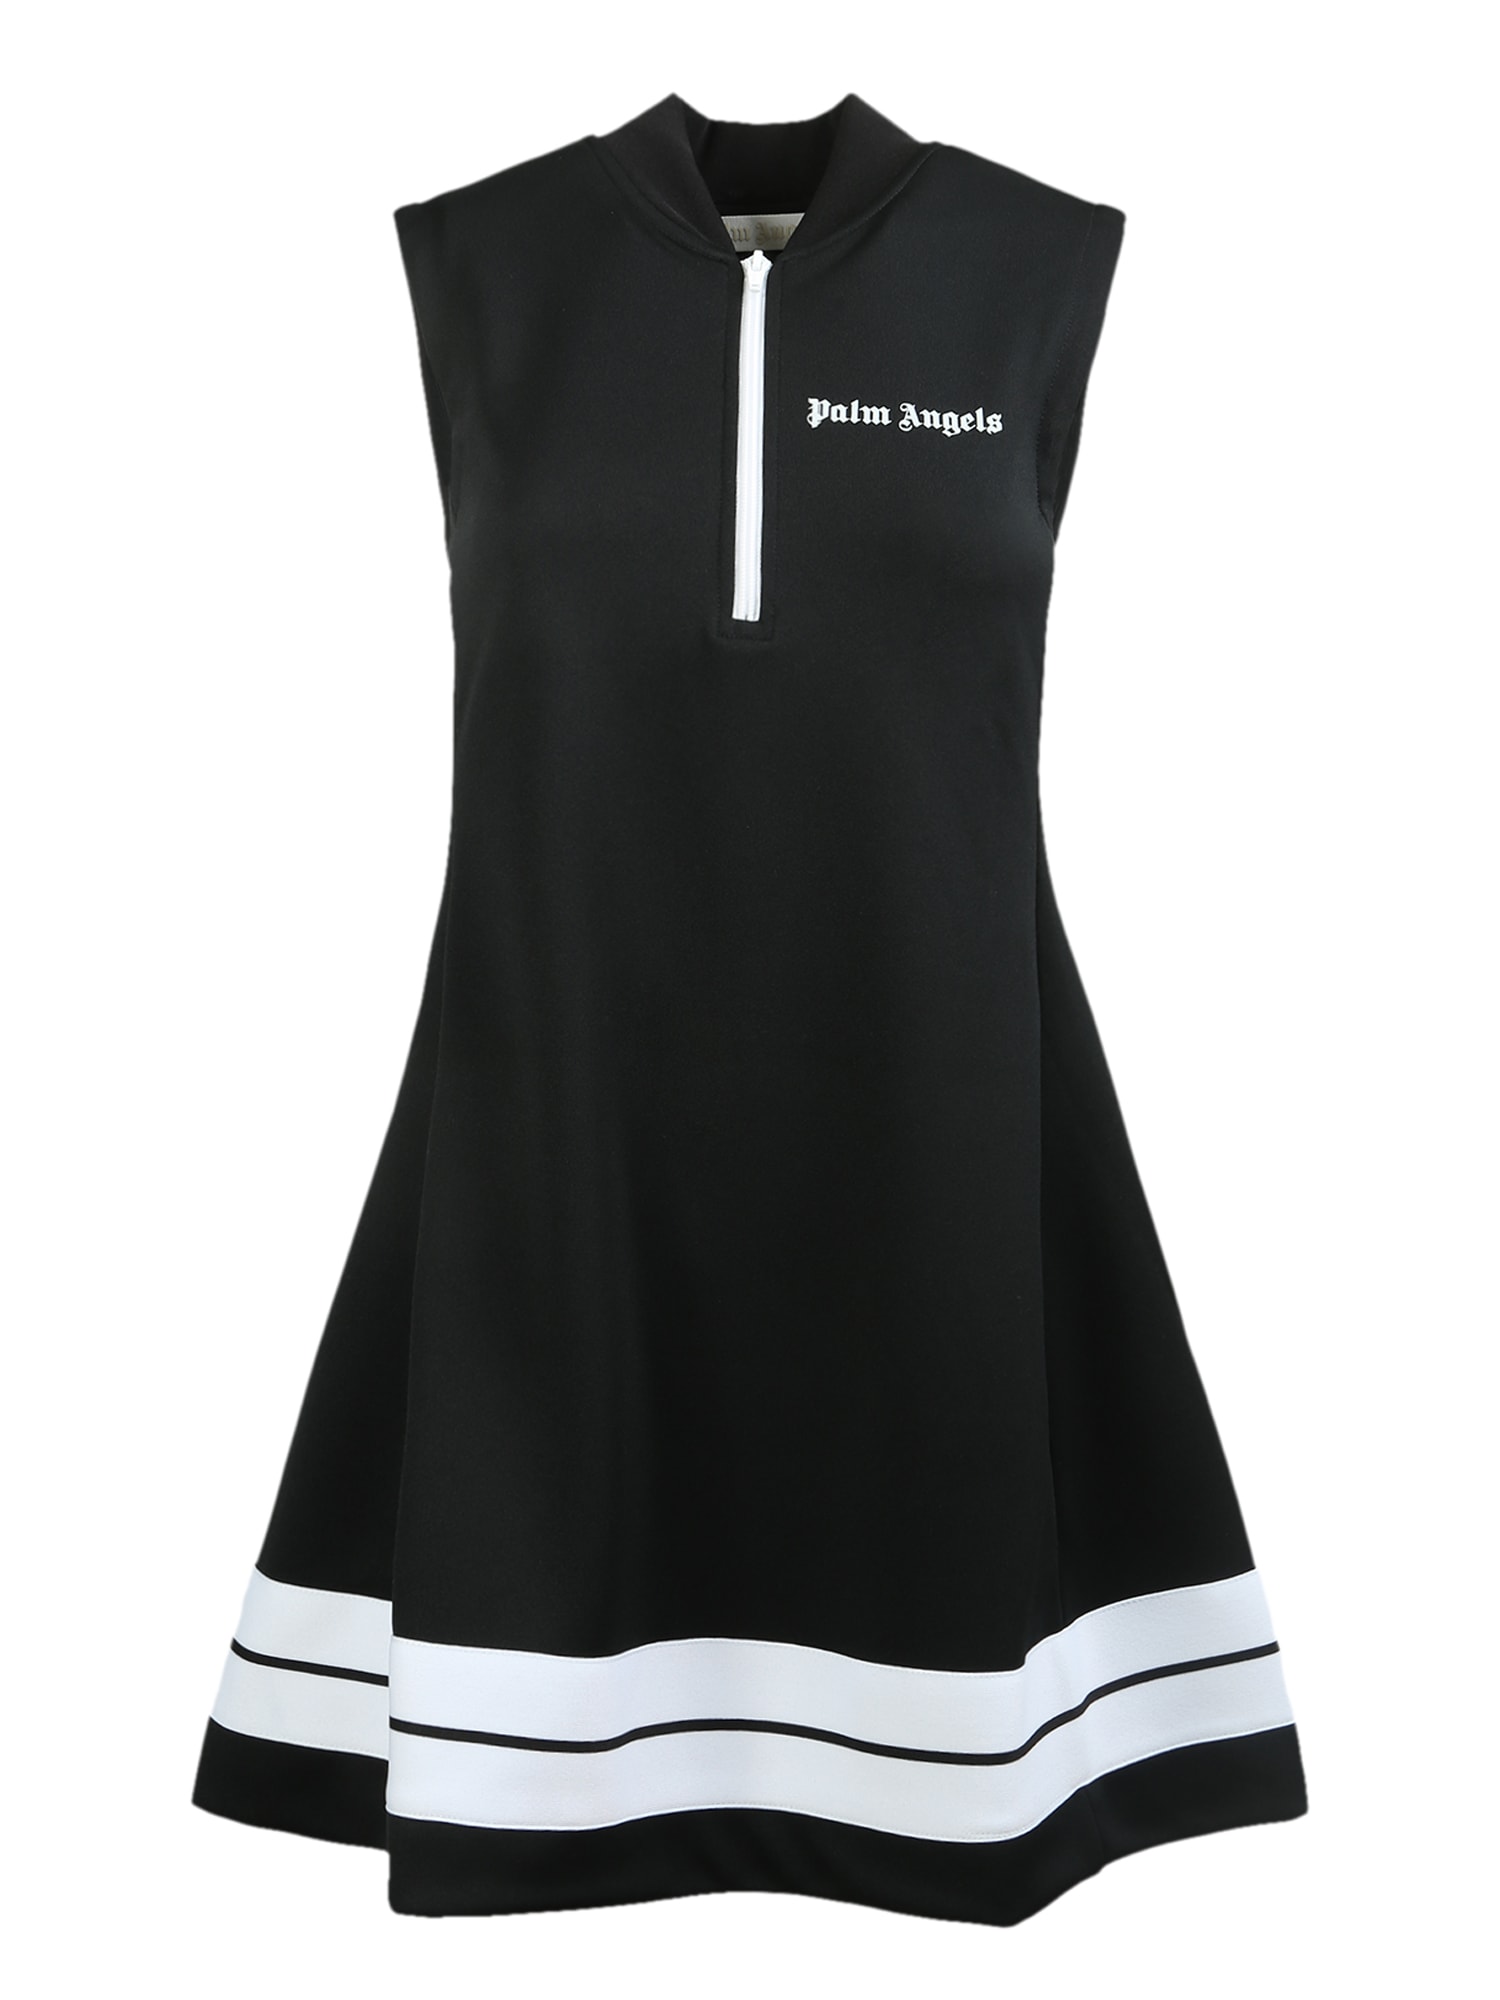 Palm Angels Retro Tennis Style Minidress